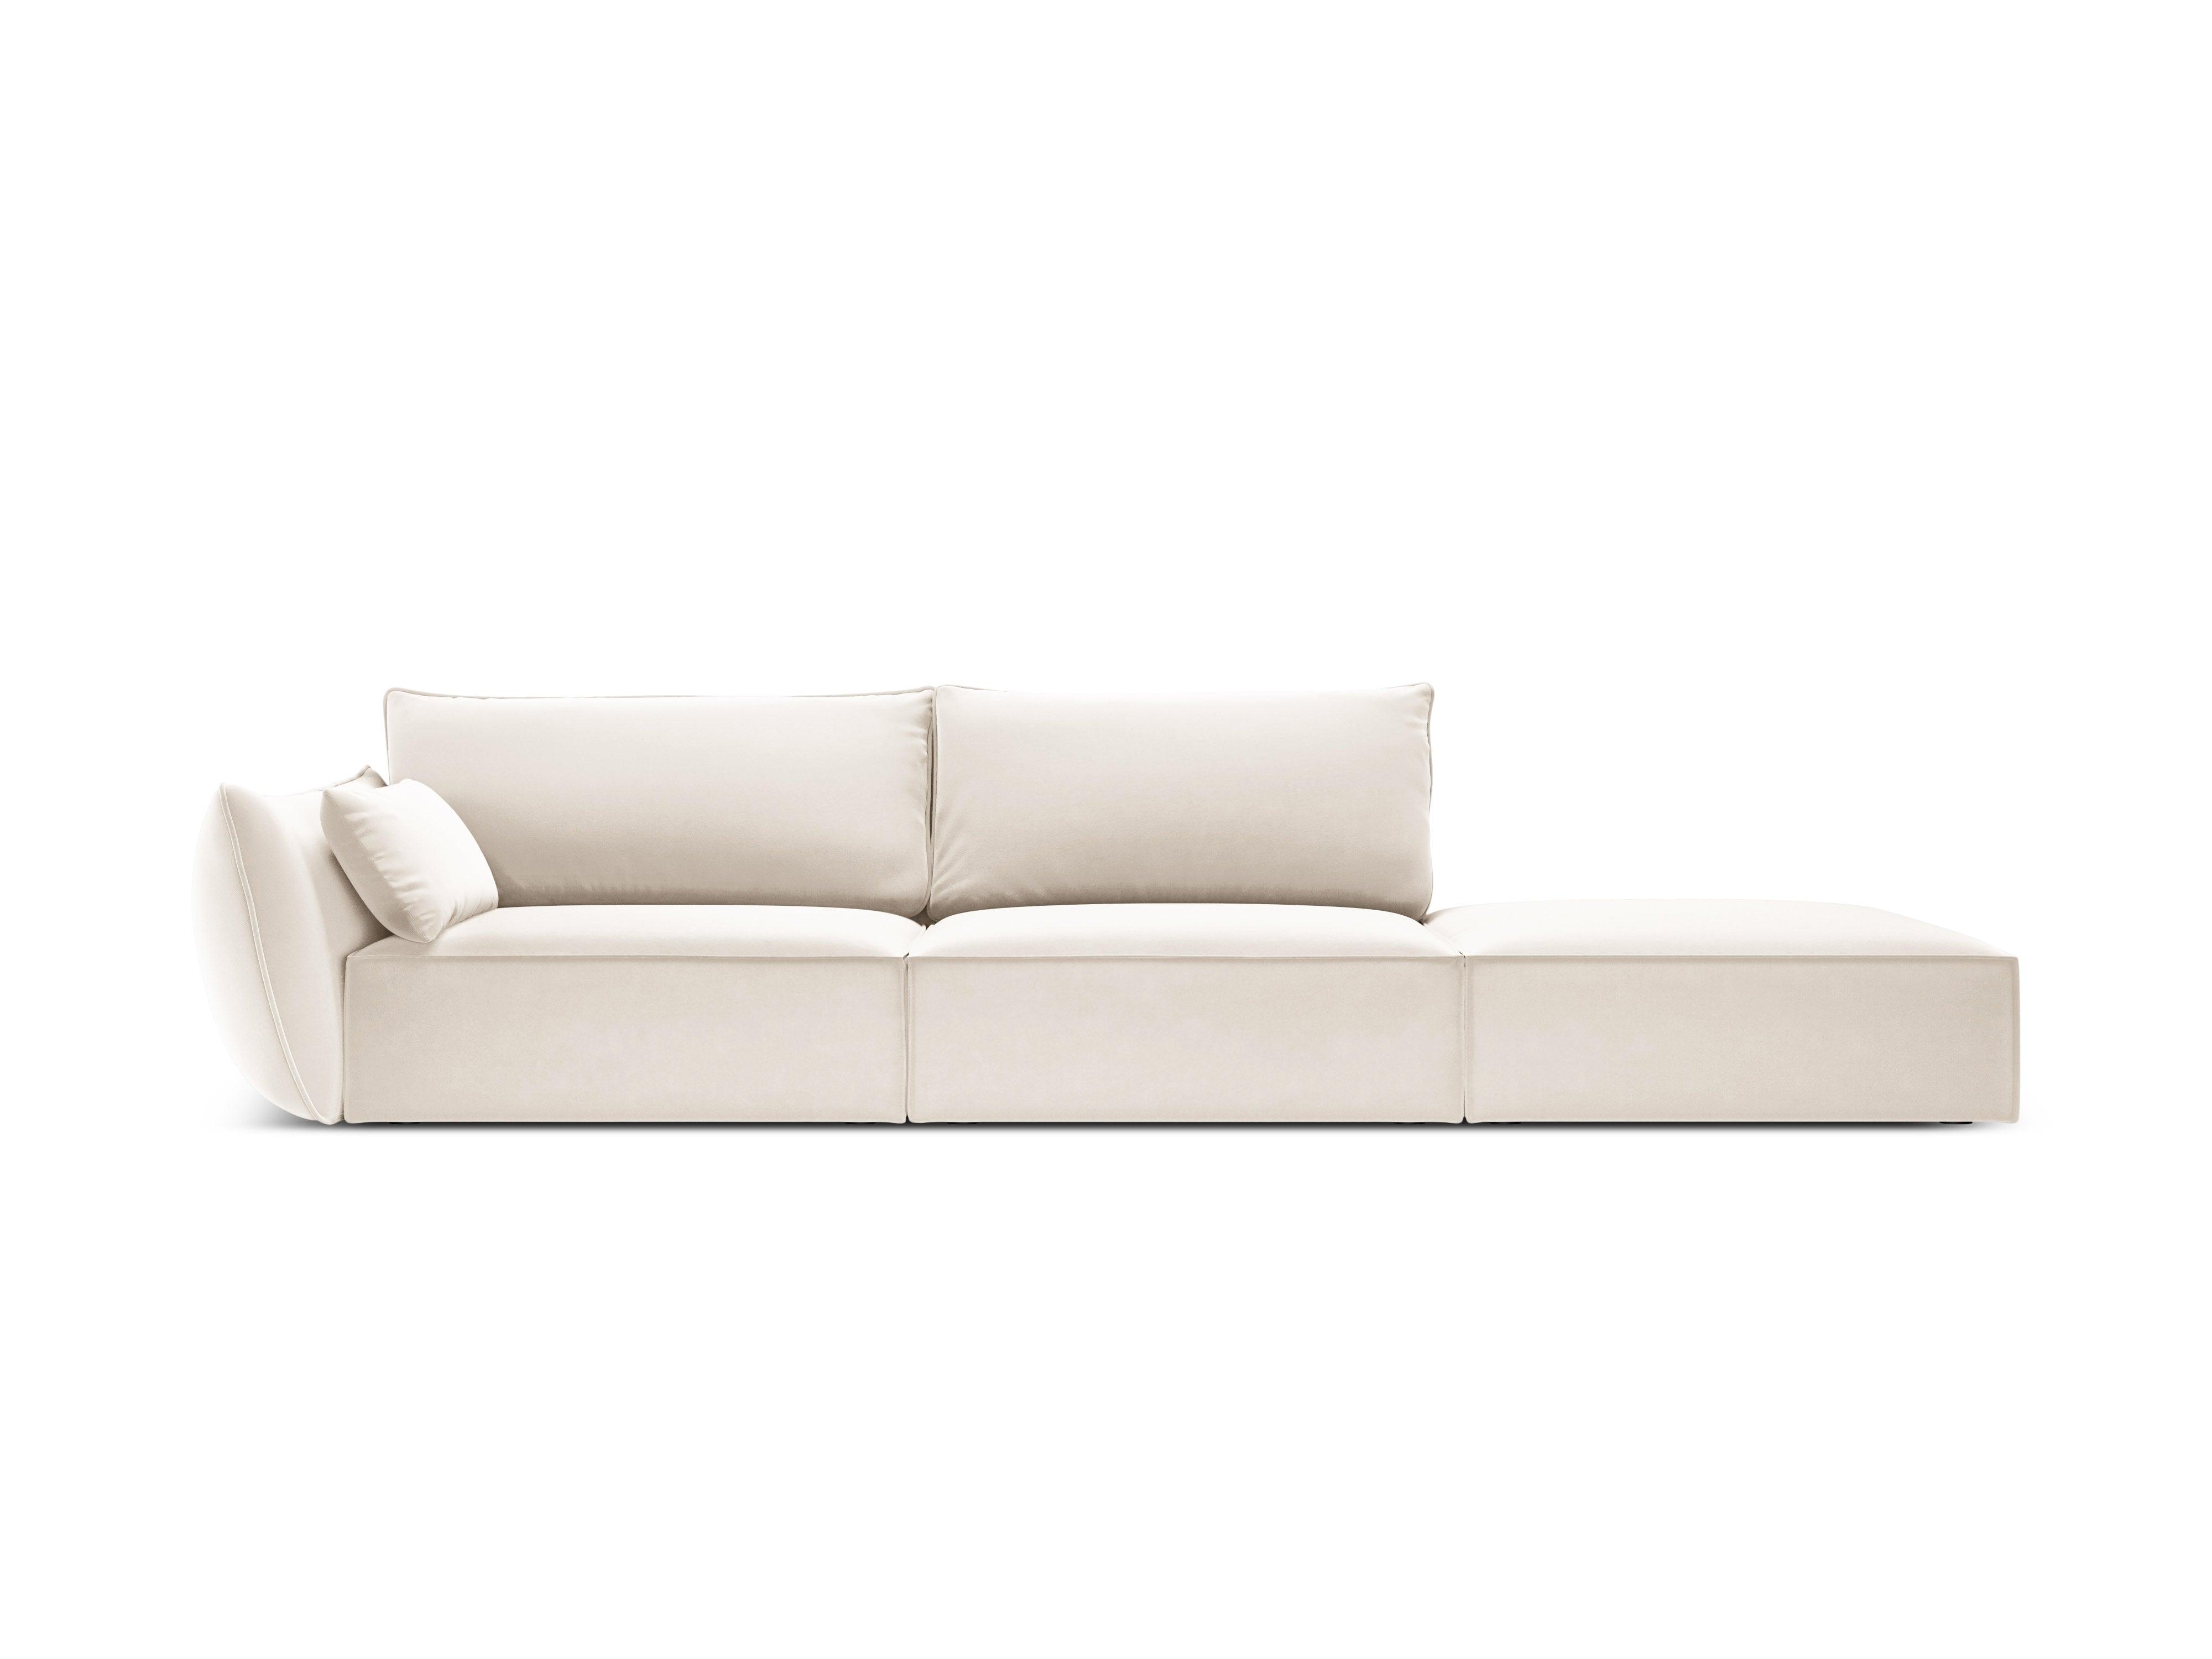 Right Velvet Sofa, "Vanda", 4 Seats, 286x100x85
Made in Europe, Mazzini Sofas, Eye on Design